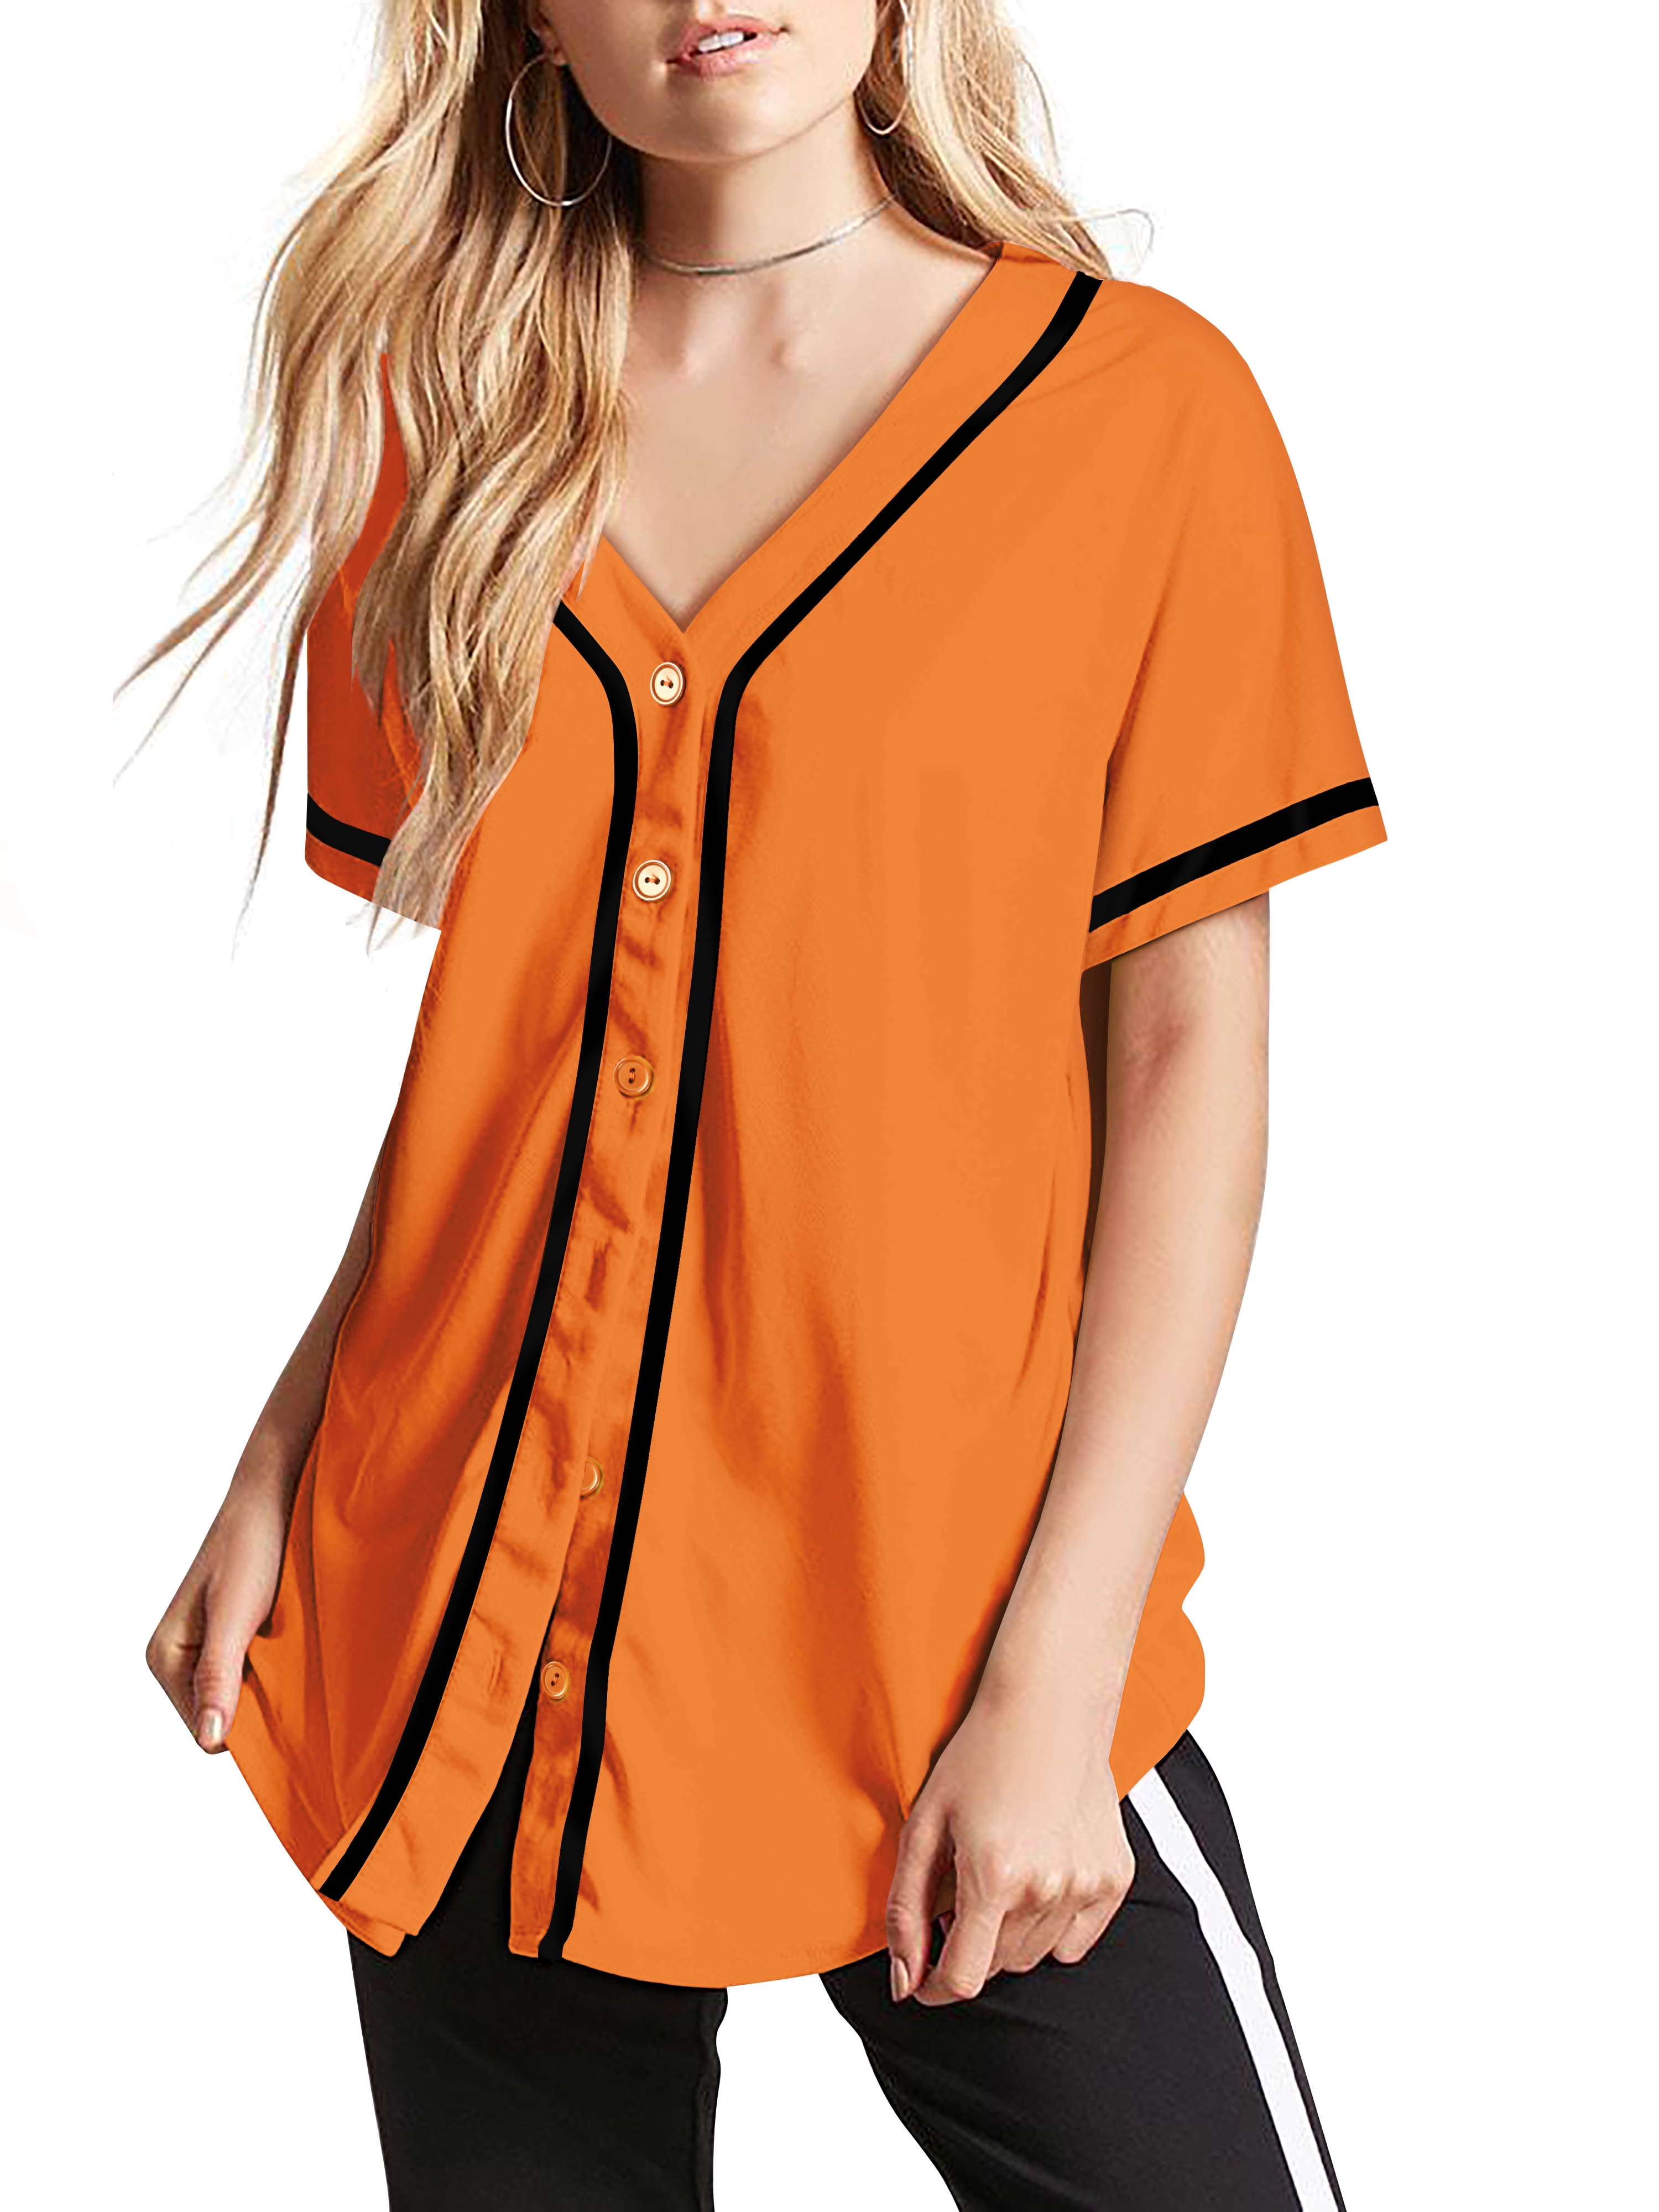 Buy Women Baseball Jersey Button Down Tee Short Sleeve Shirt Sports Uniform  Softball Jersey Active T-Shirt, White, Large at .in